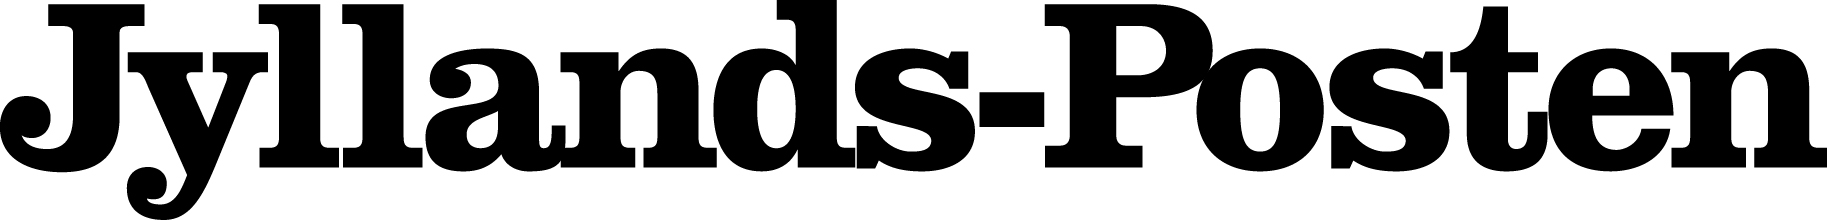 Jyllands-Posten-logo